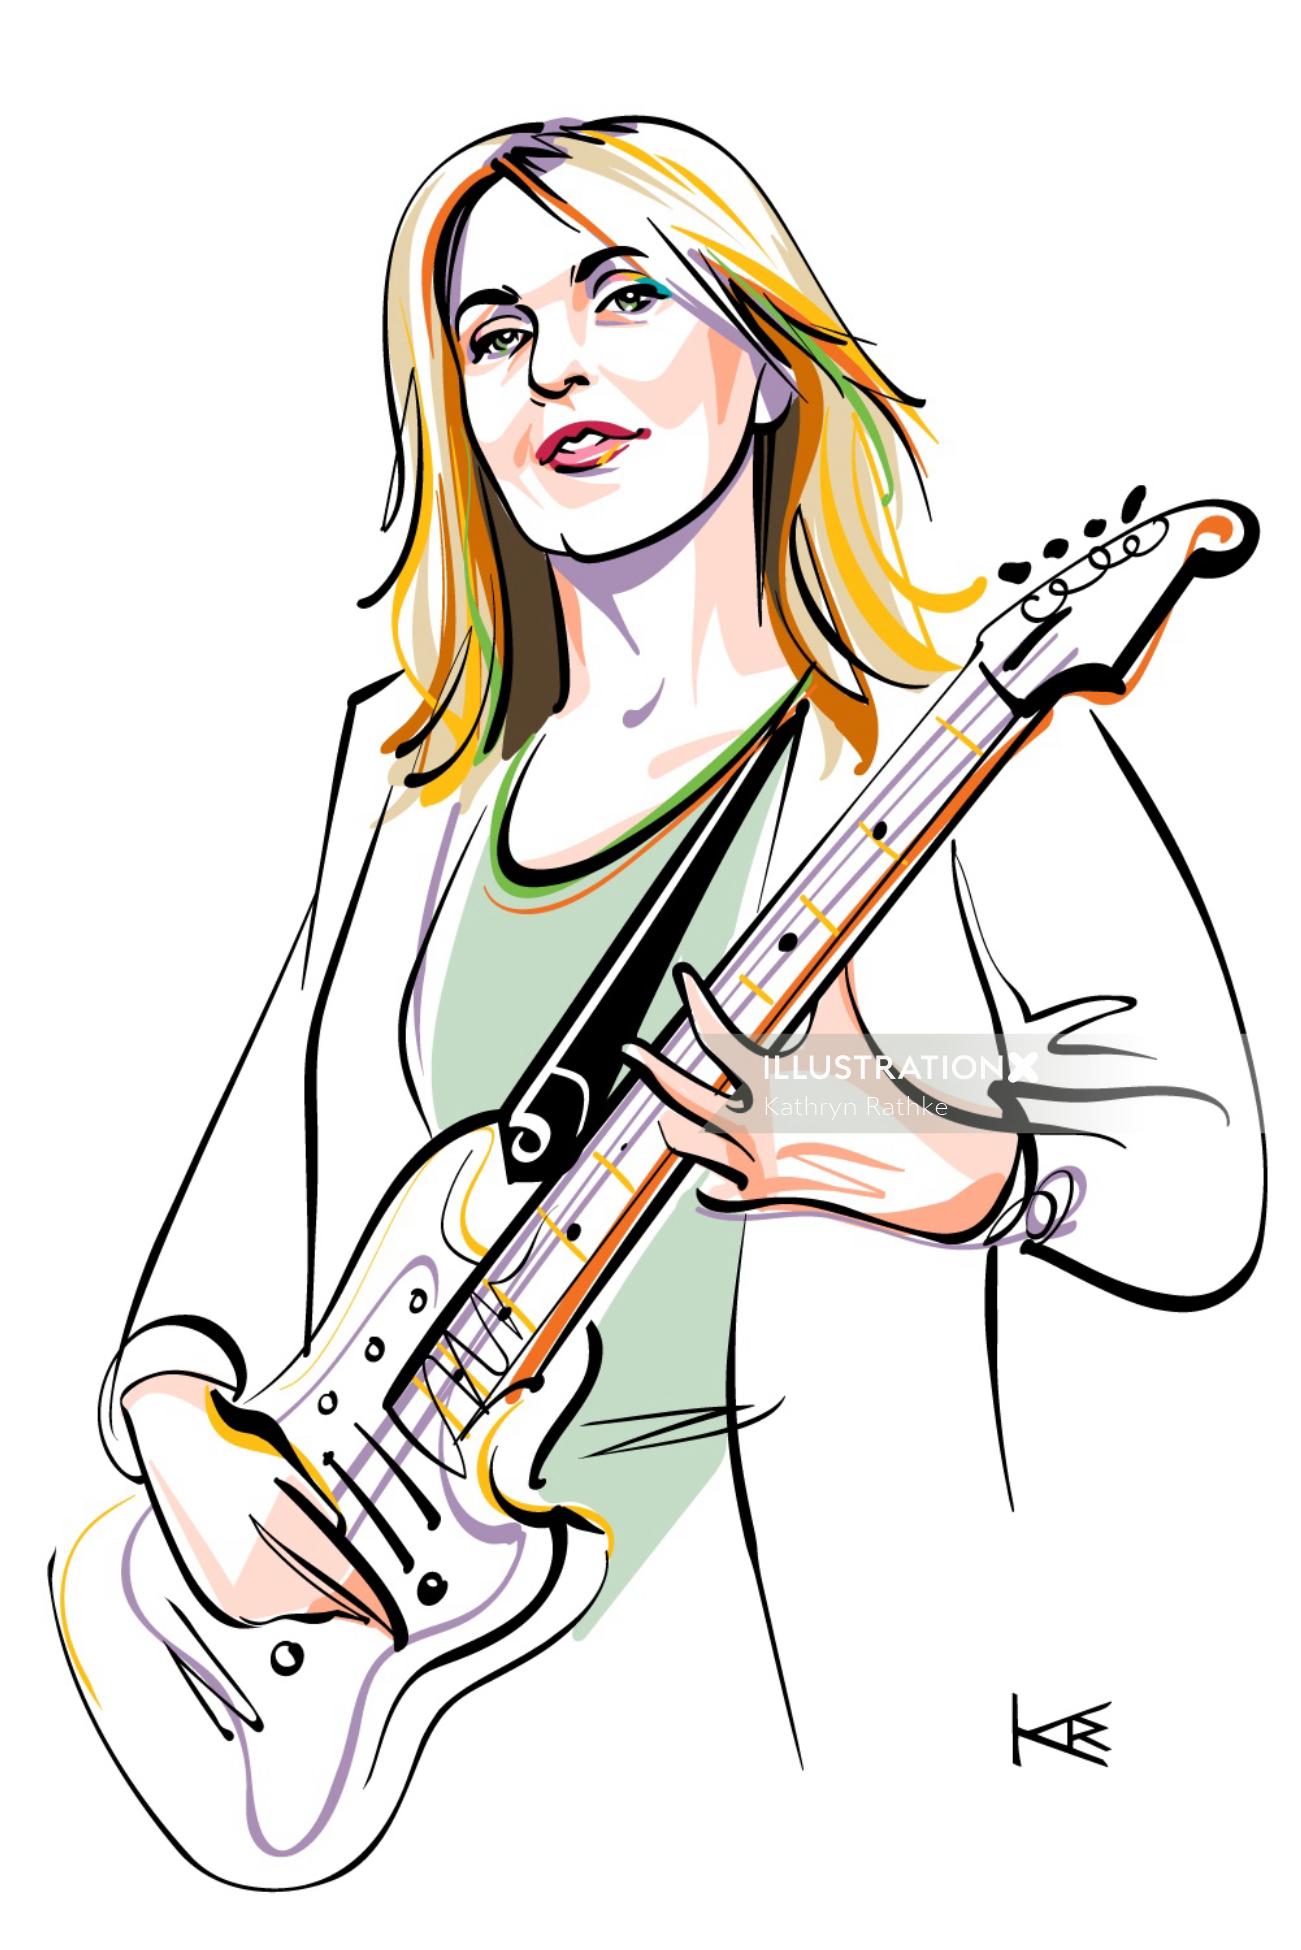 Rocking portrait of Liz Phair, an American singer-songwriter